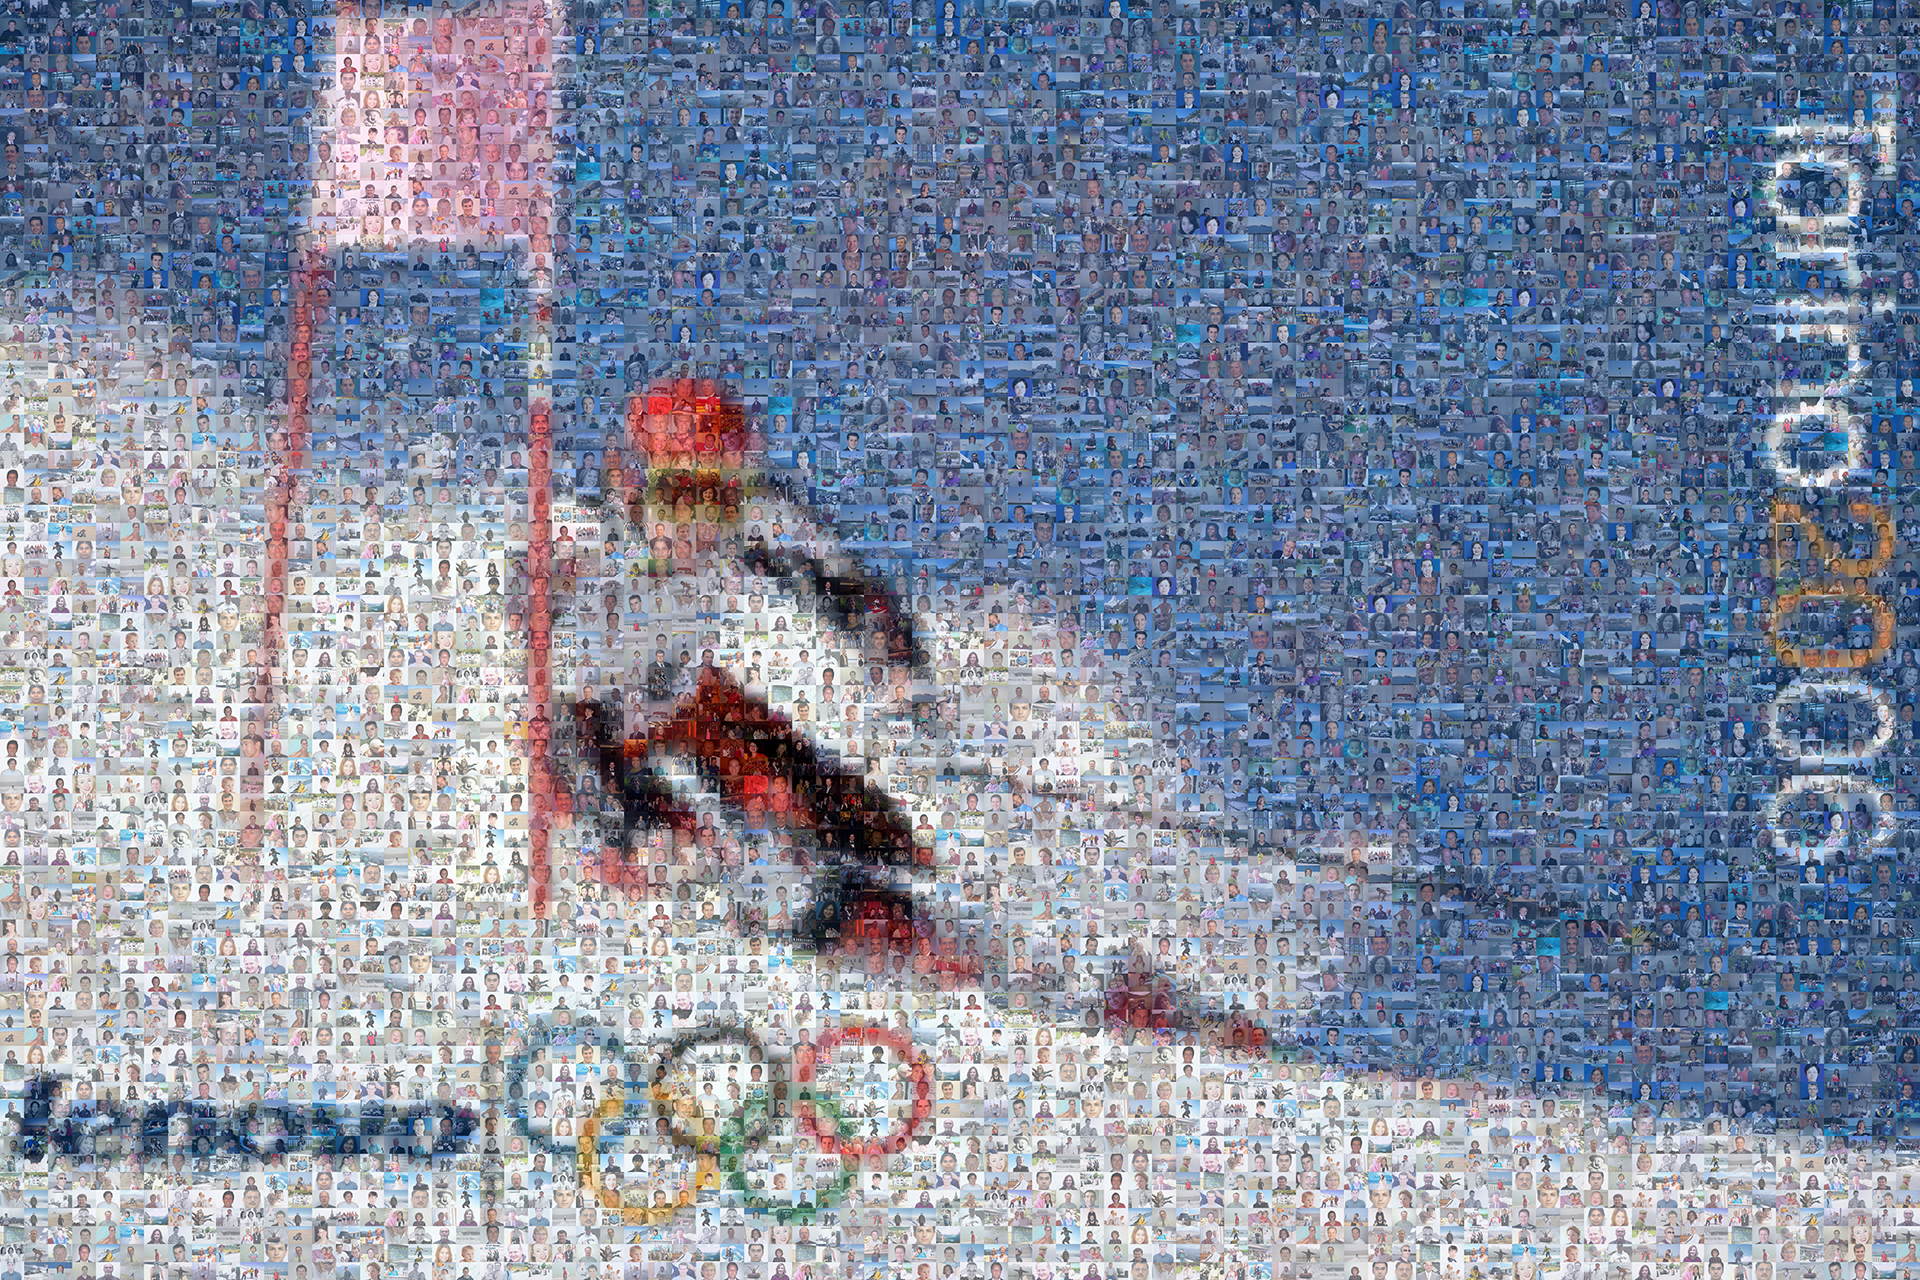 photo mosaic 4' x 6' wall mural created using over 1500 customer selected photos